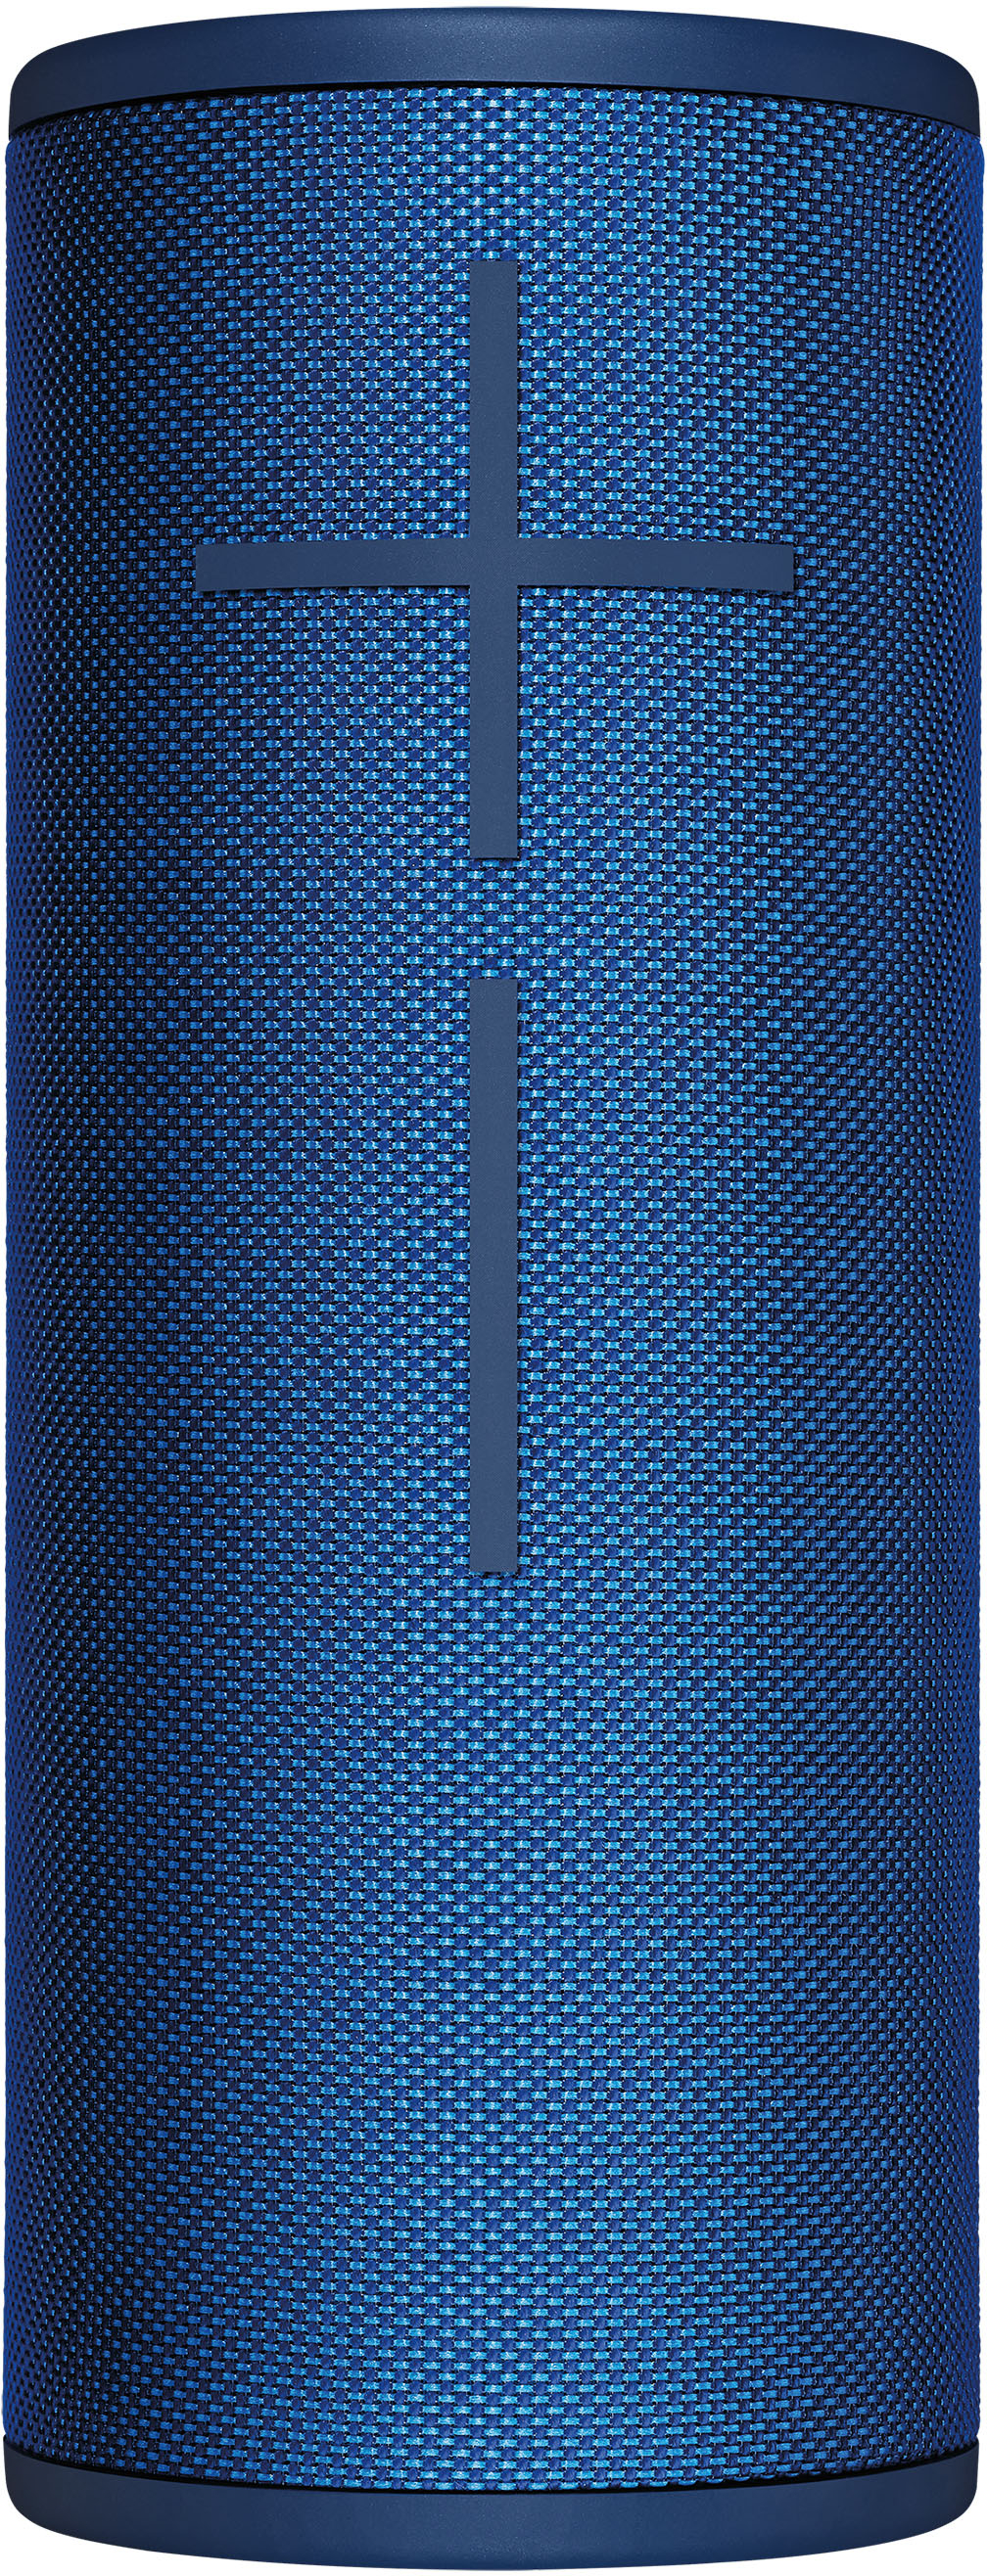 Ultimate Ears - BOOM 3 Portable Wireless Bluetooth Speaker with Waterproof/Dustproof Design - Lagoon Blue